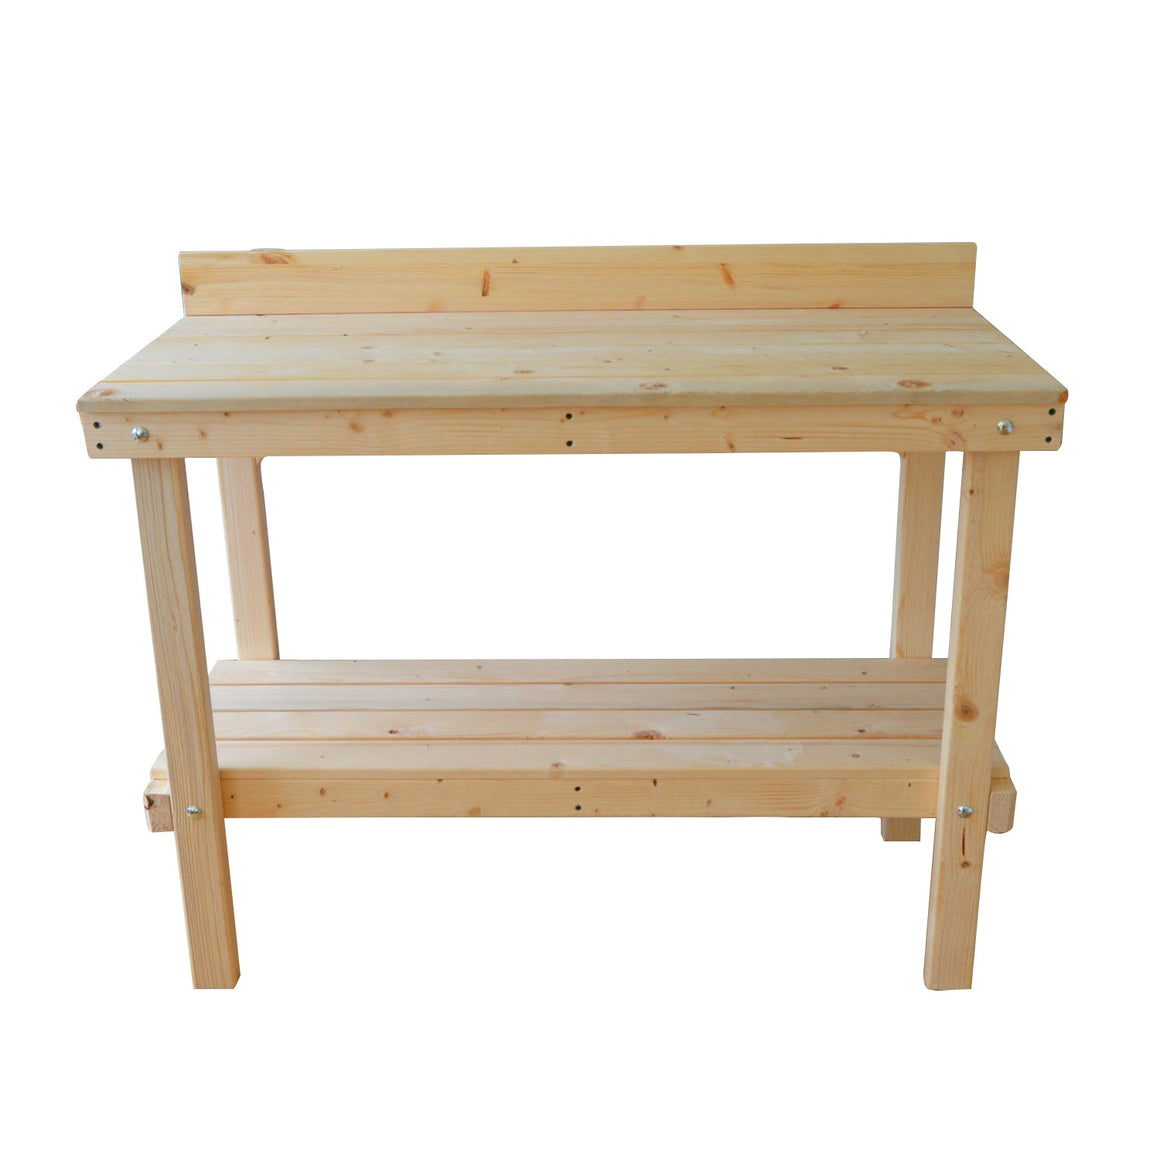 wooden outdoor pine table